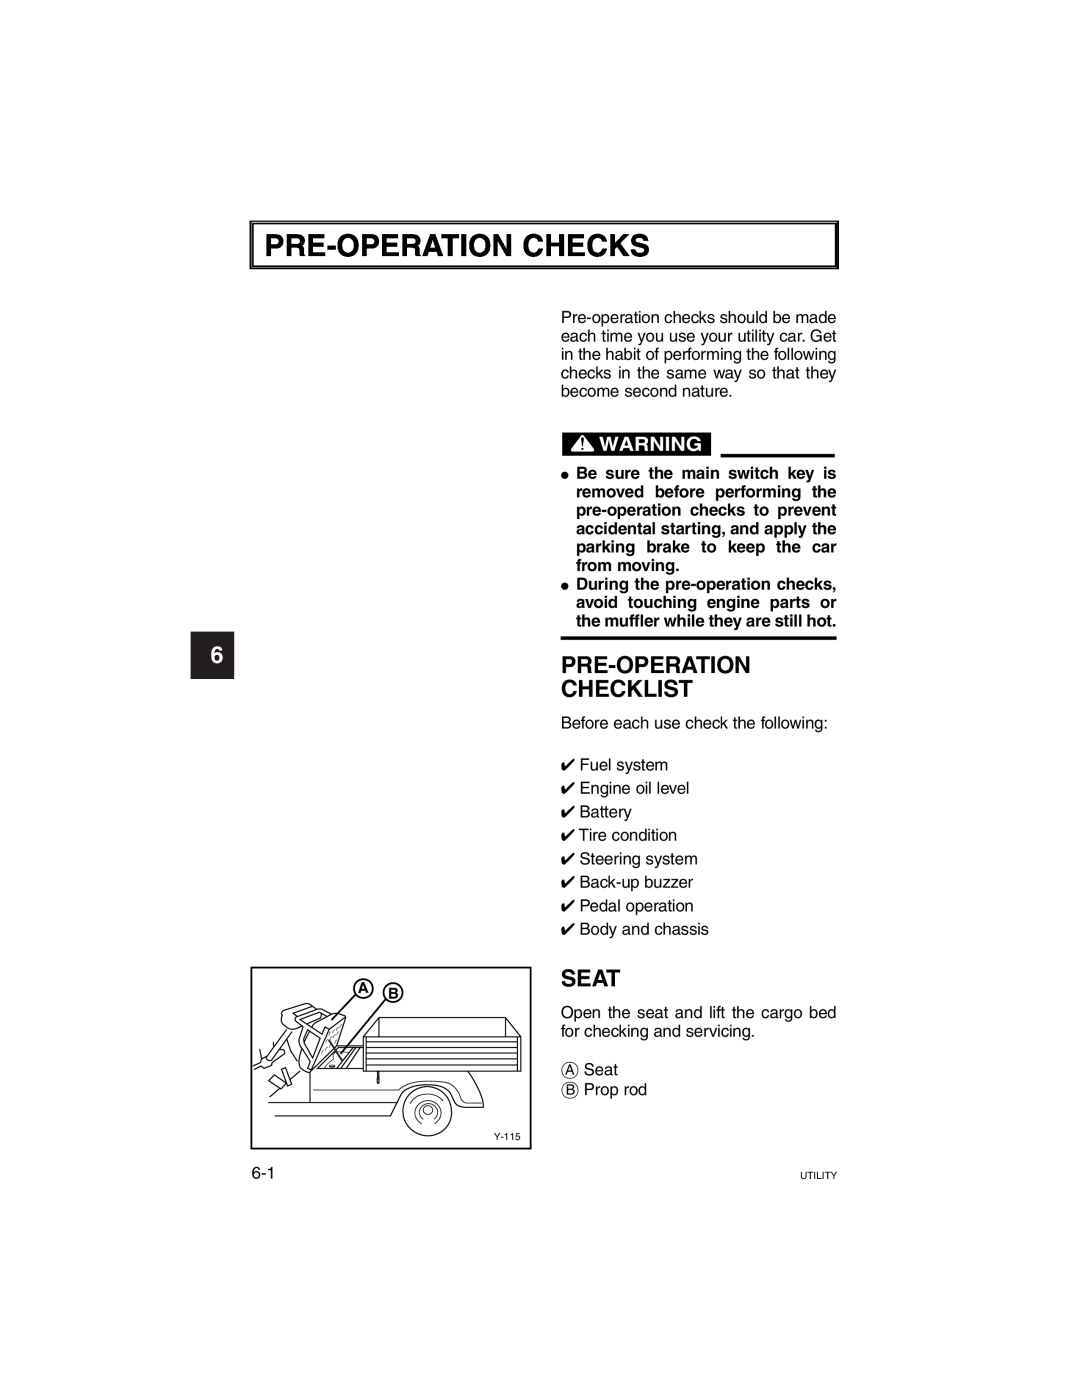 Yamaha G21A manual Pre-Operationchecks, Pre-Operation Checklist, Seat 